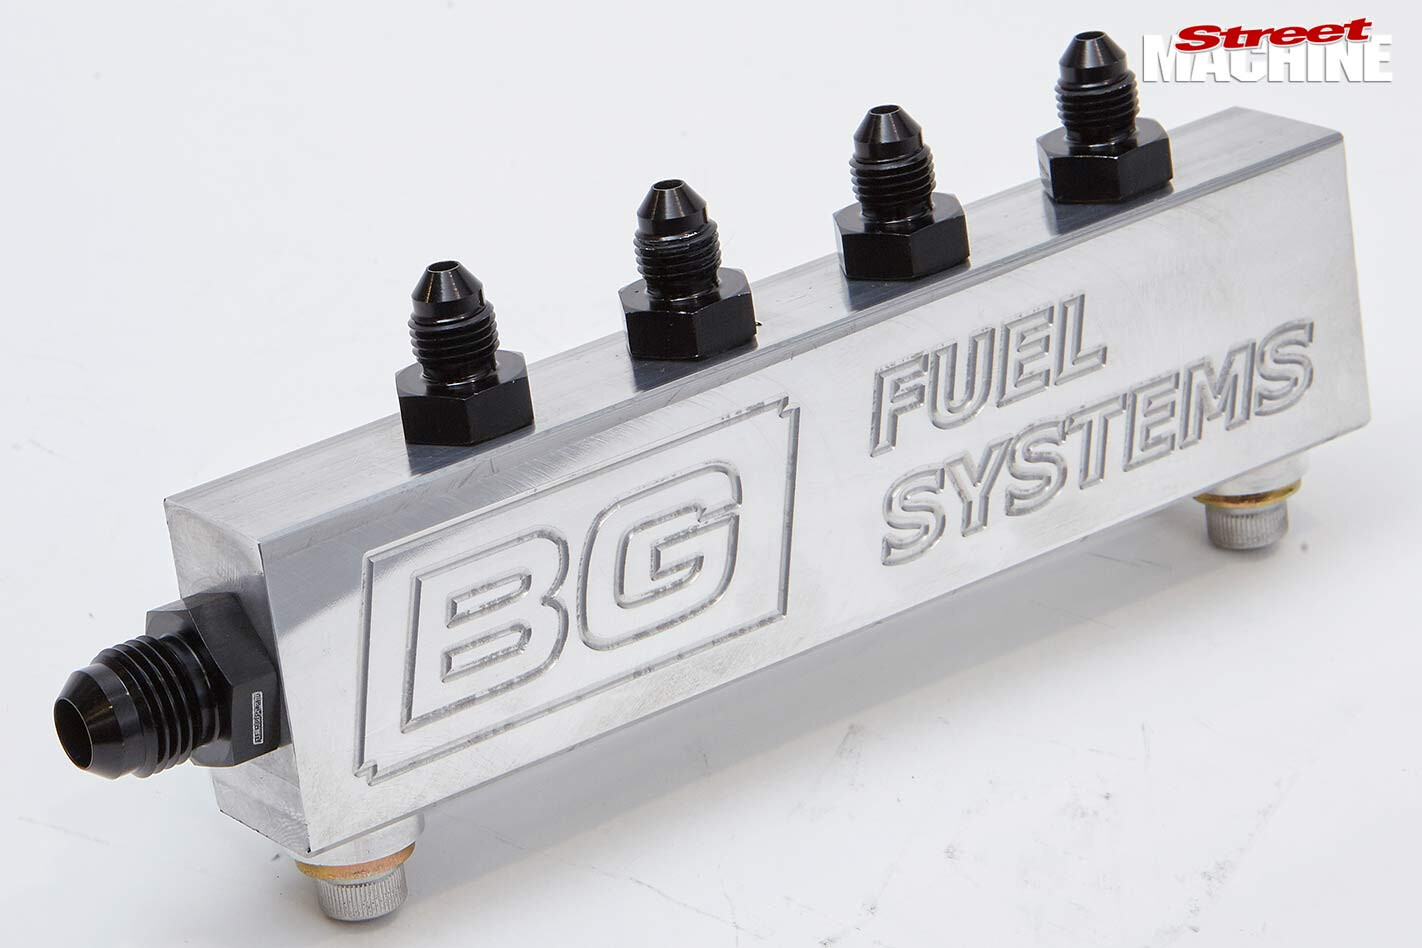 BG fuel systems